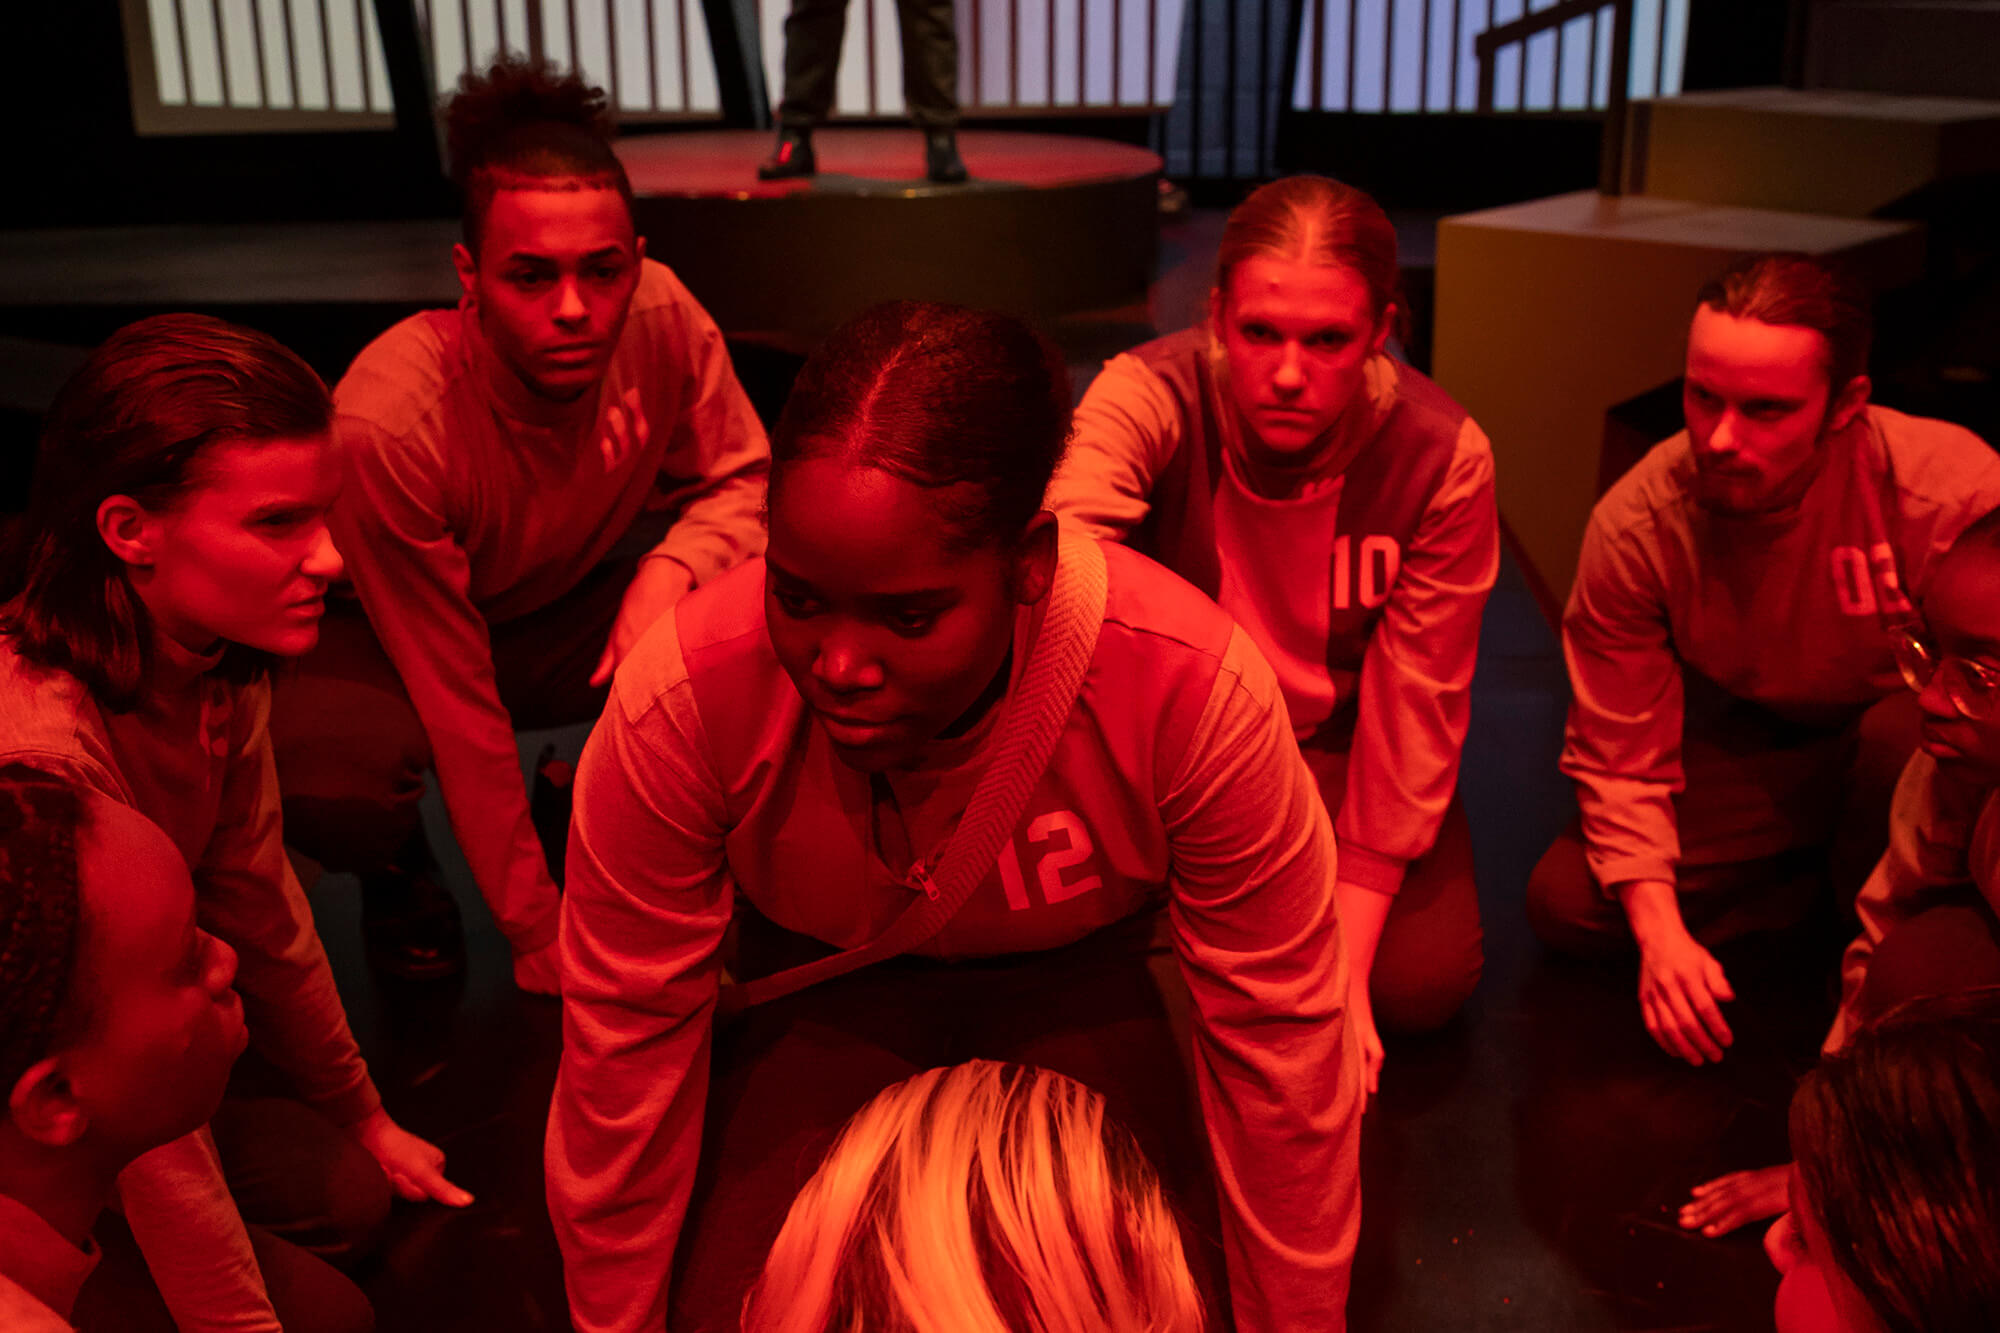 UWG theatre students under red lighting